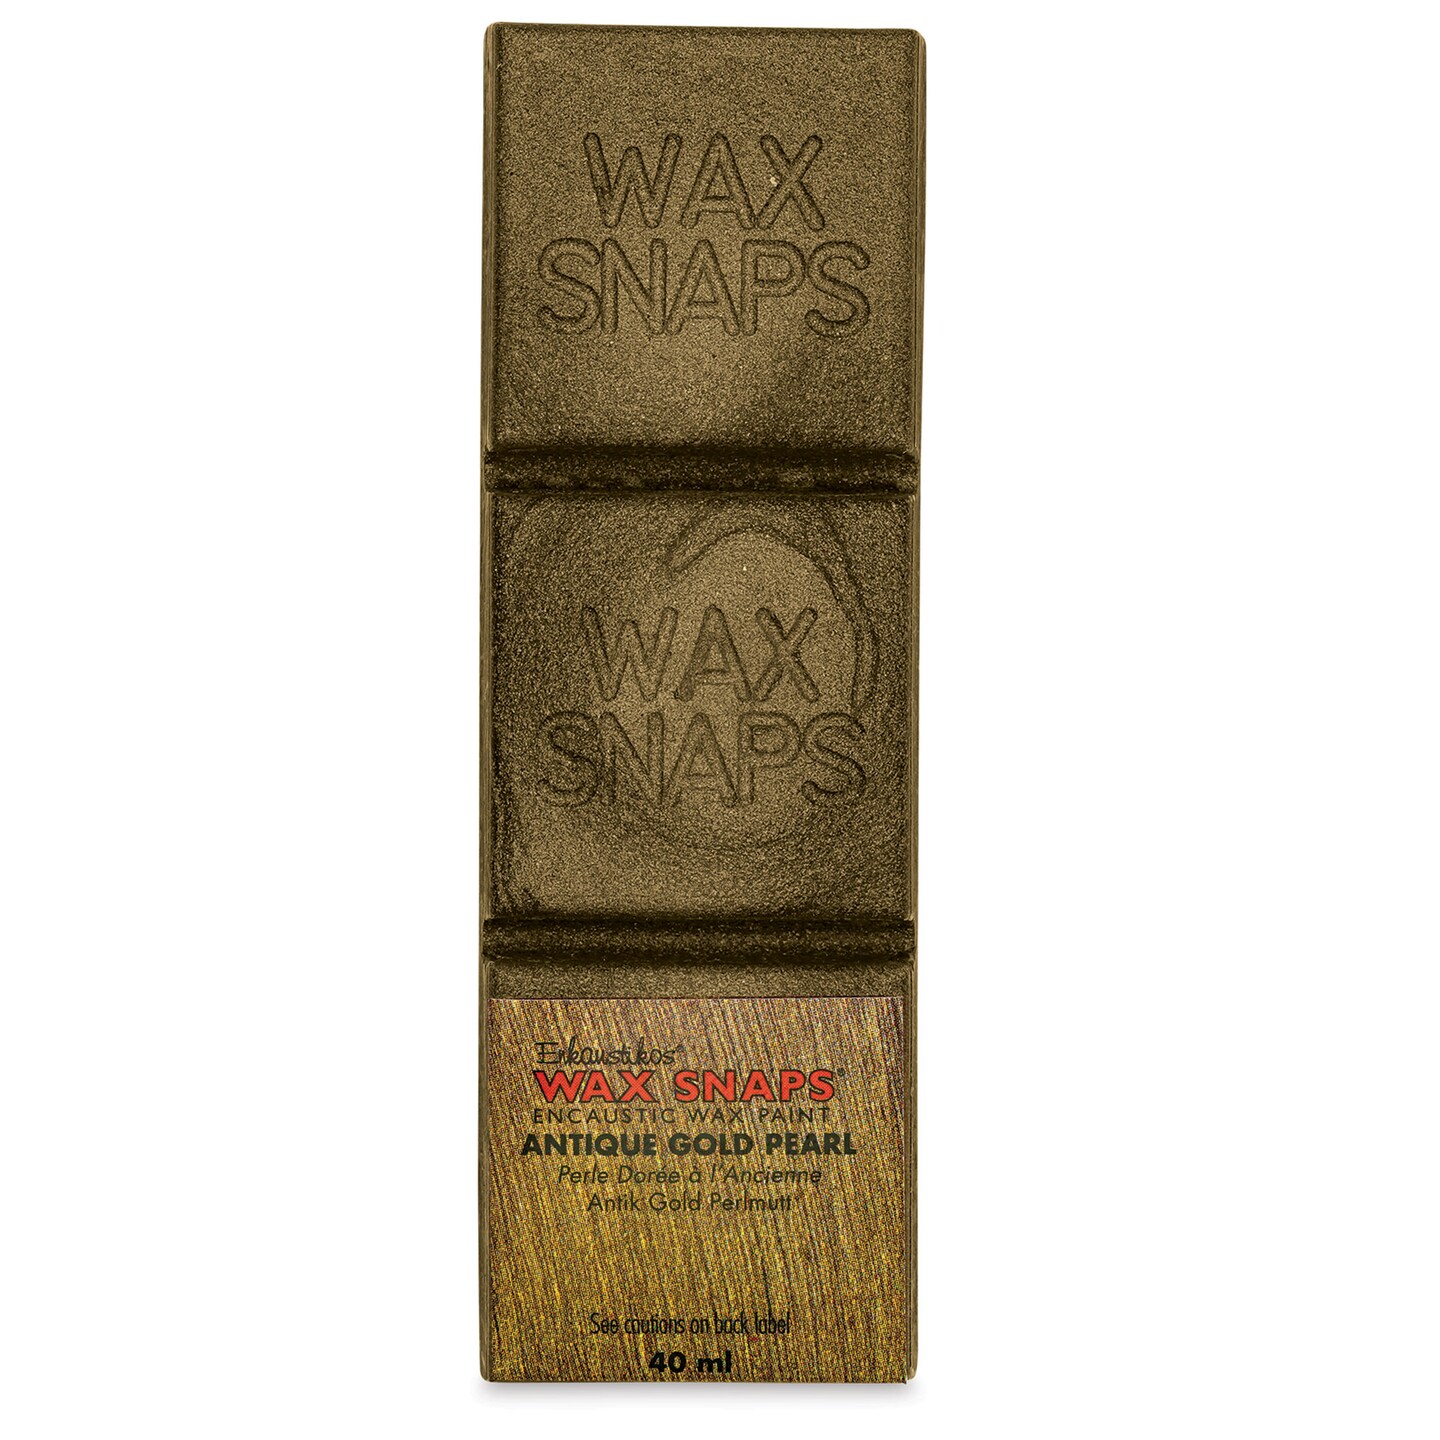 Enkaustikos Wax Snaps Encaustic Paints - Antique Gold Pearl, 40 ml cake